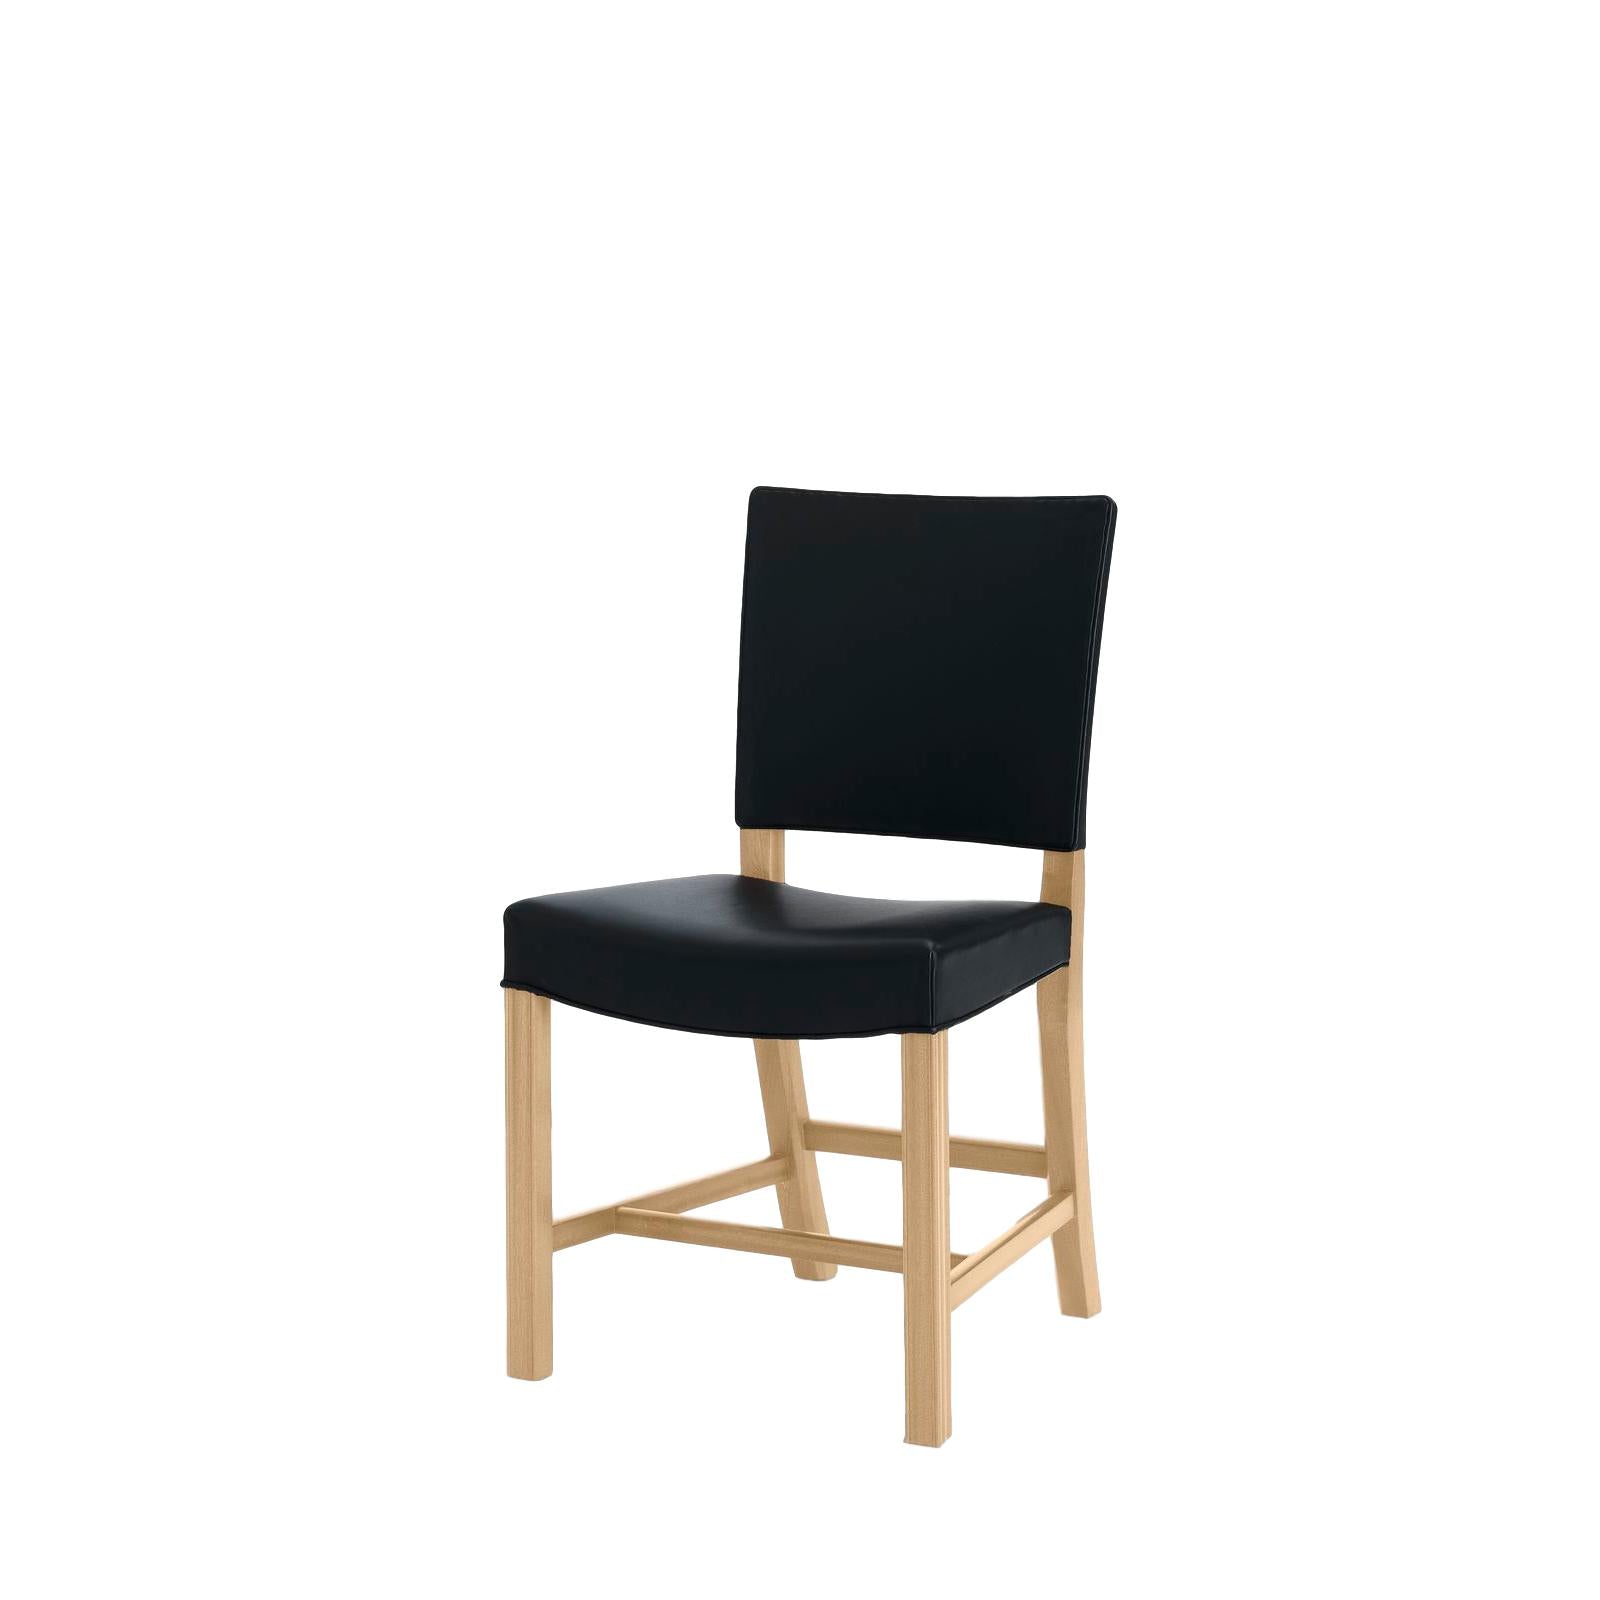 Carl Hansen Kk37580 Large Red Chair, Soaped Oak/Black Leather